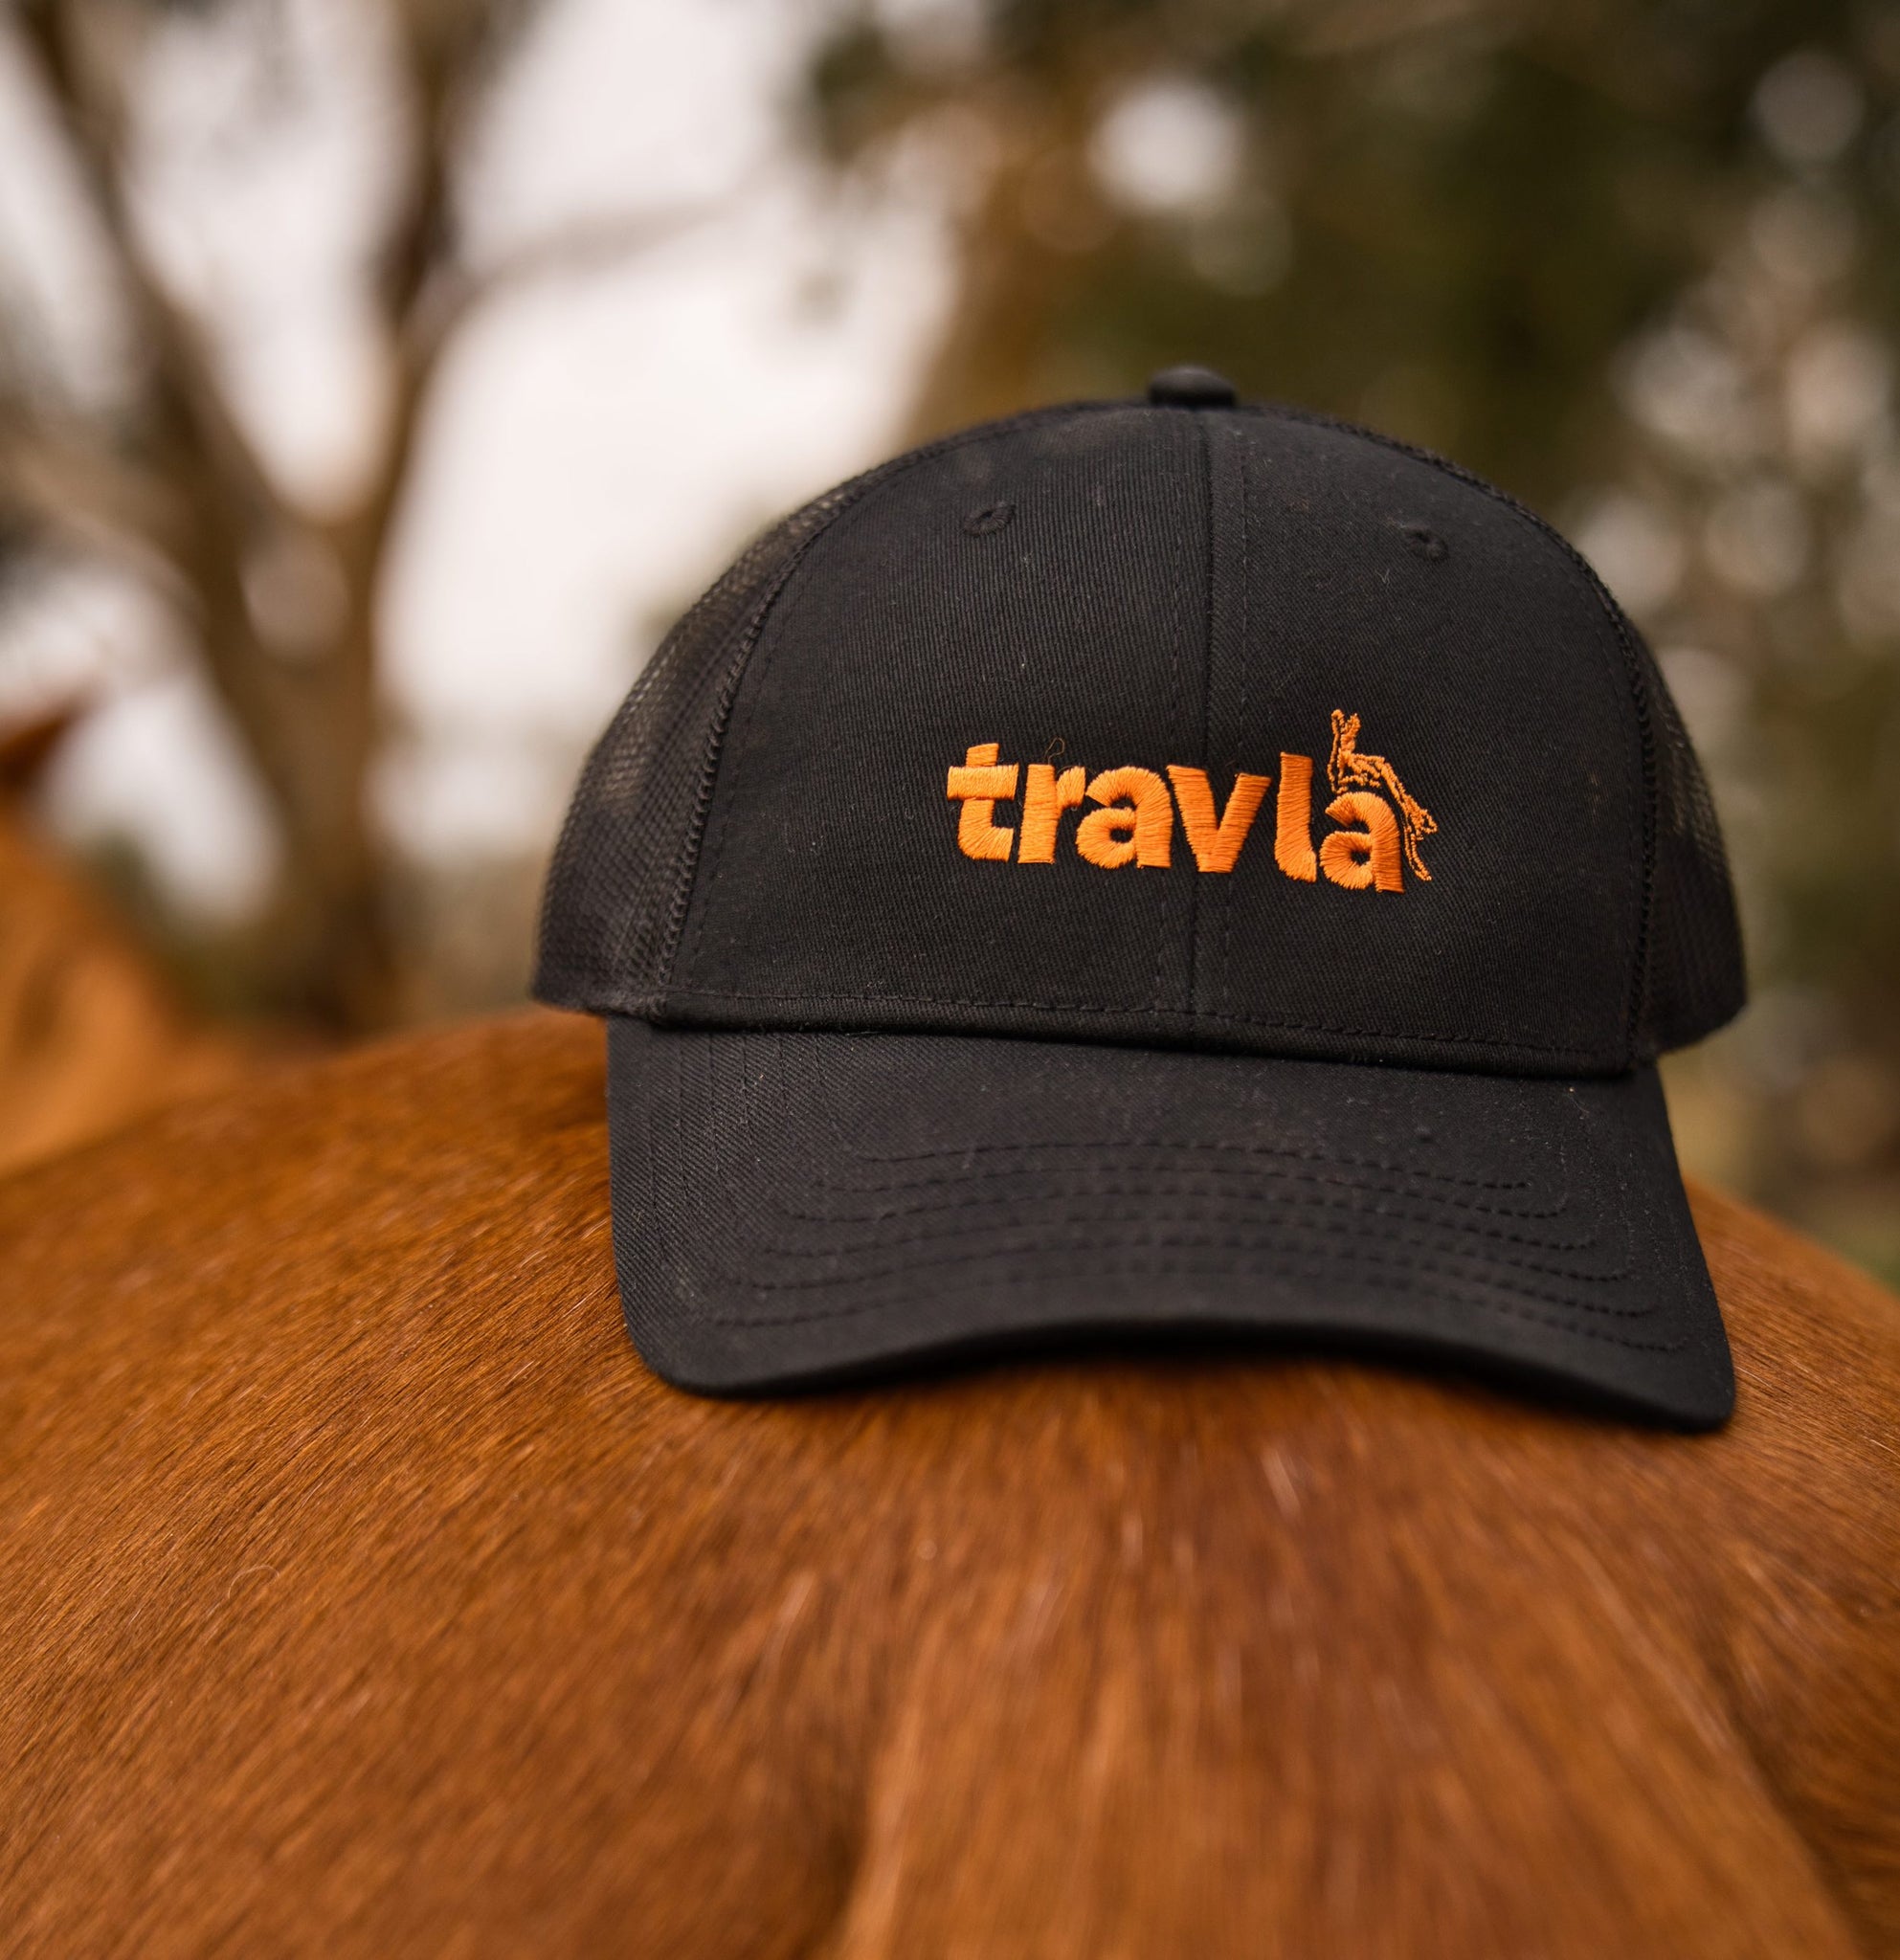 travla mesh logo black-snapback on horse